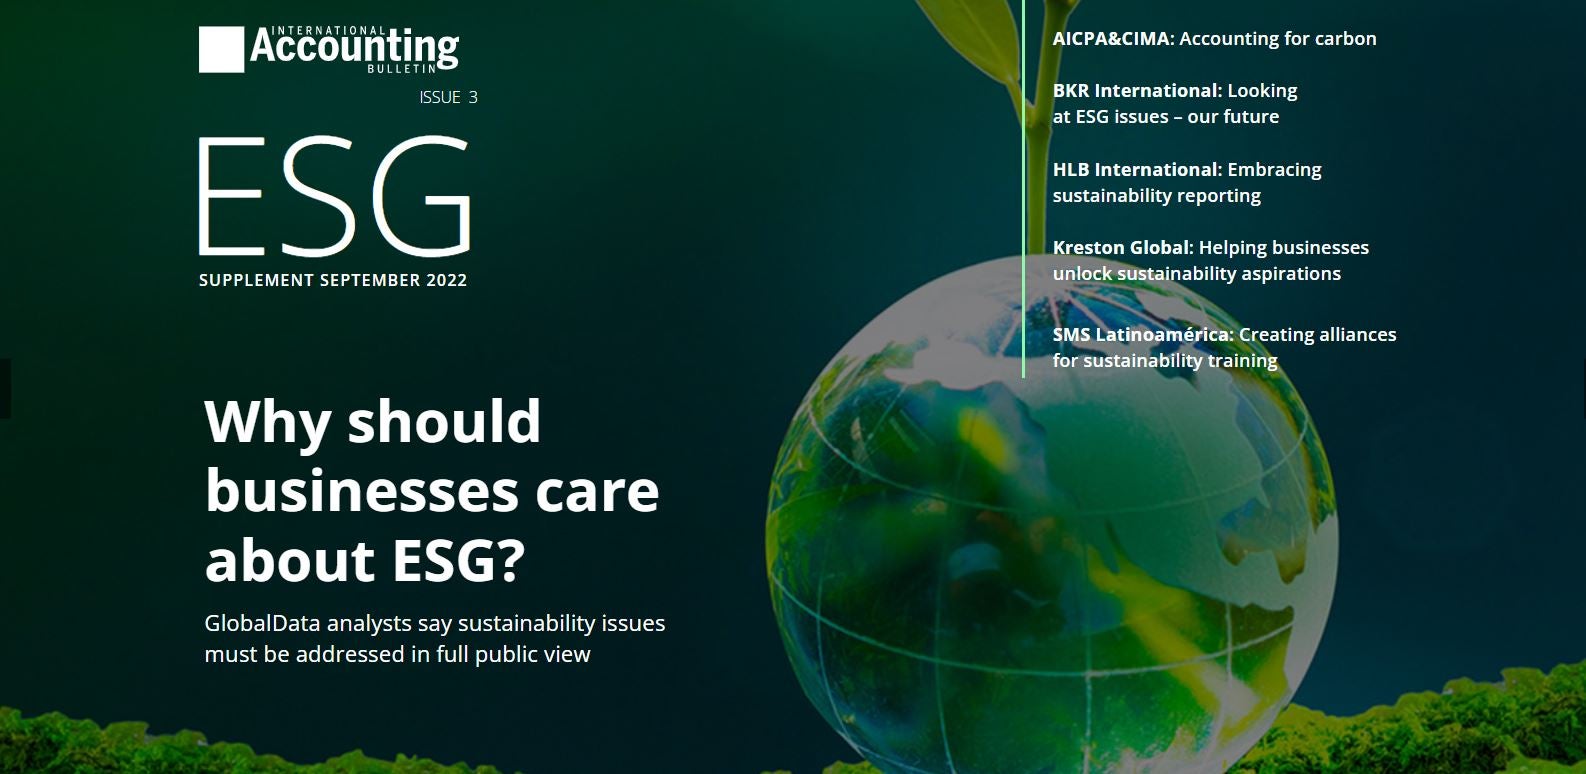 IAB September 2022 - ESG Supplement - Issue 3